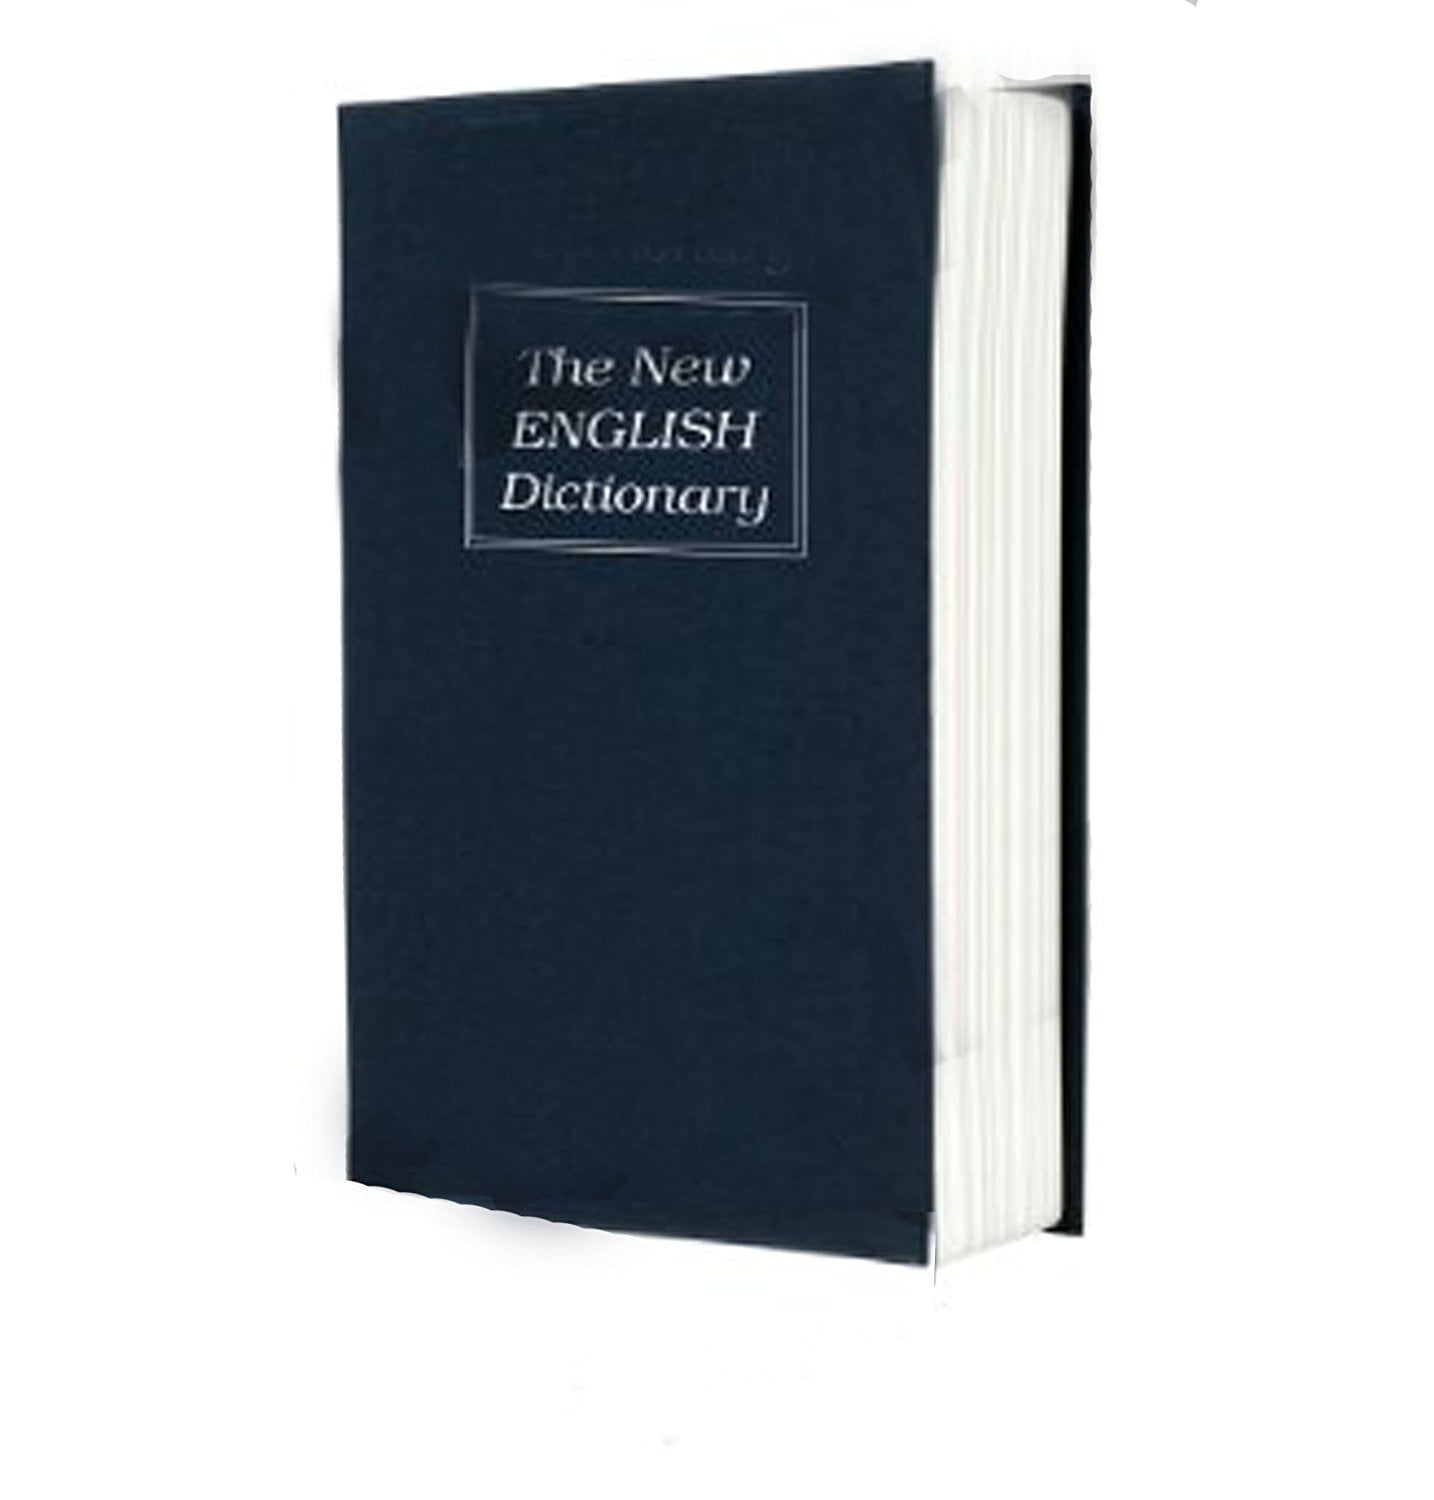 Dictionary Hollow Book Safe Diversion Secret Stash Booksafe Lock & Key SMALL RED 